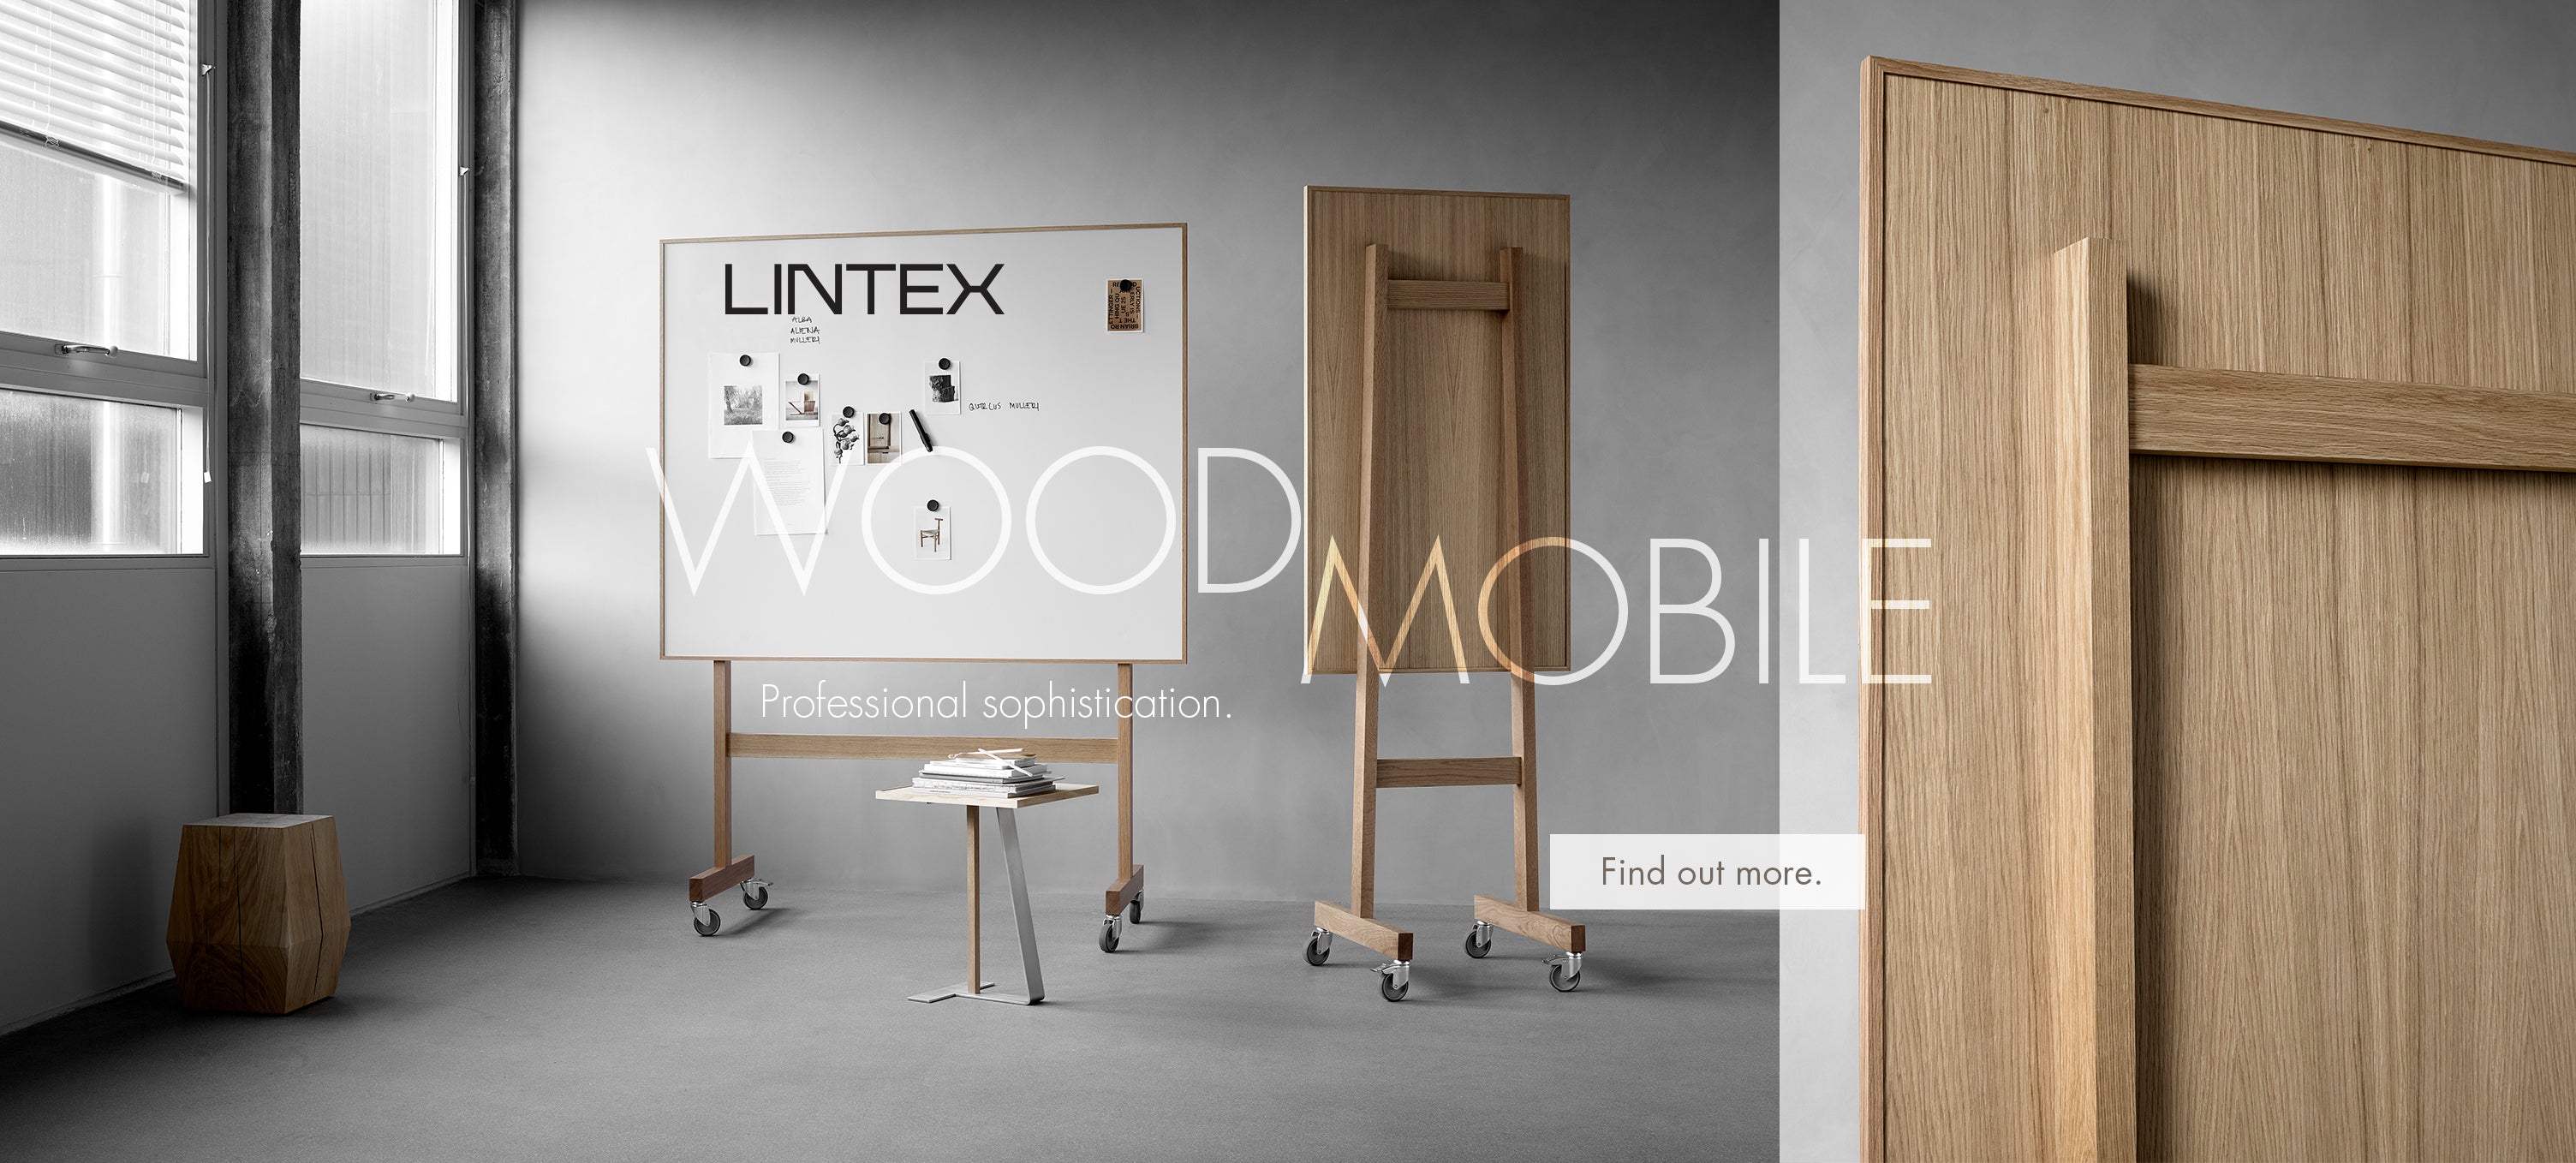 Lintex Wood Mobile writing board